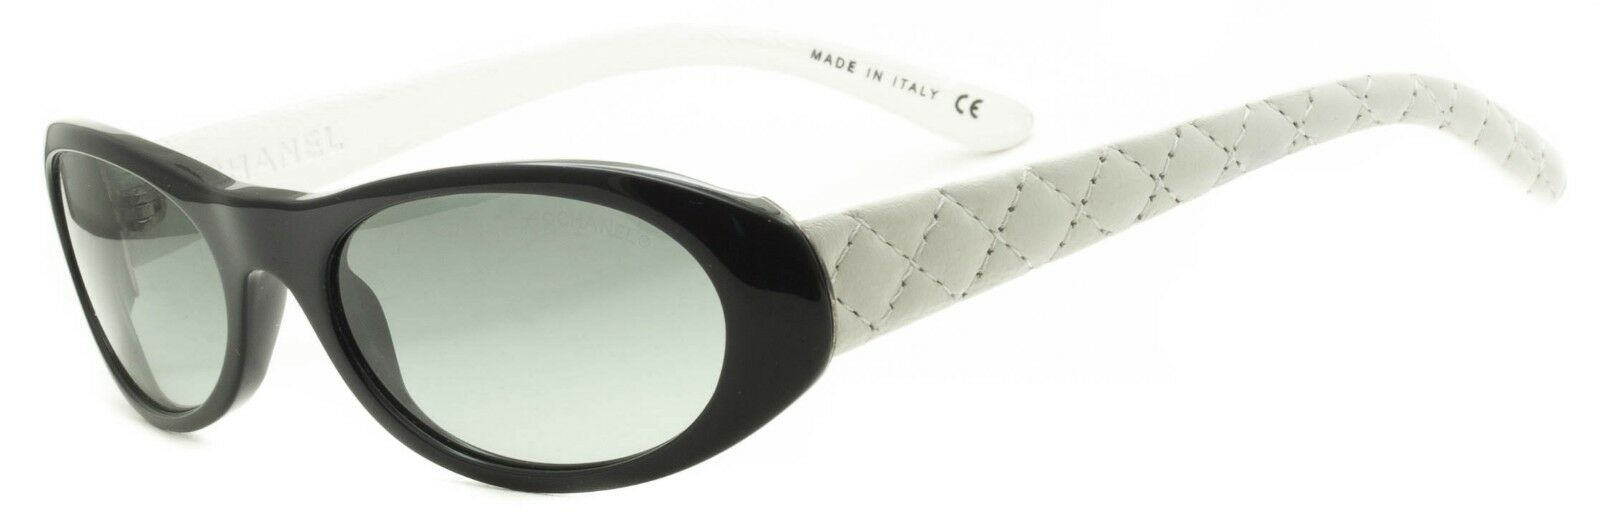 CHANEL, Accessories, Chanel 531 513c Perle Collection Sunglasses